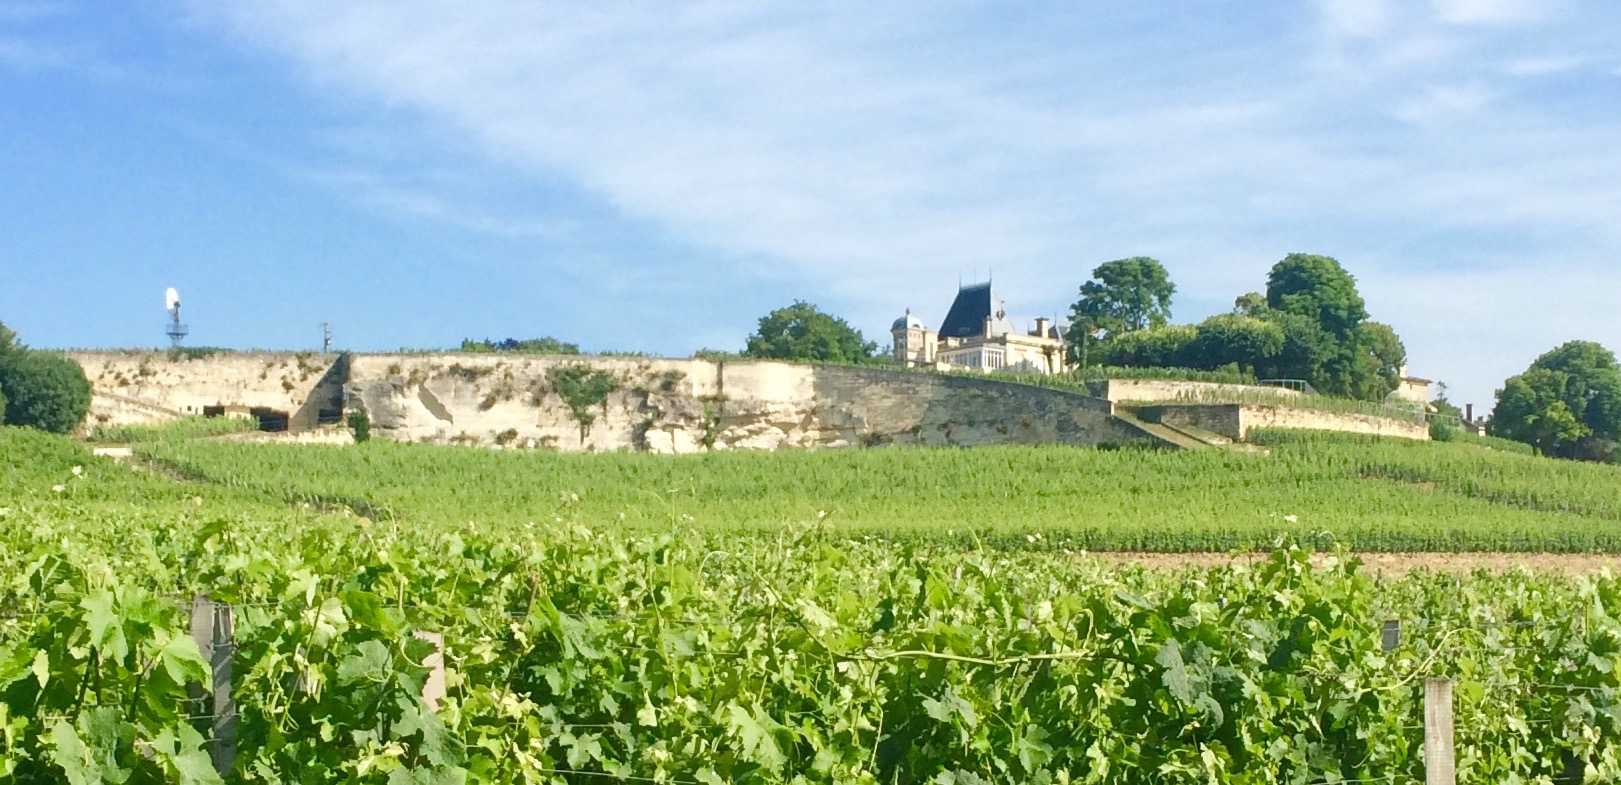 Château Ausone - The granddaddy of all the Saint-Émilion vineyards. Photo by Marla Norman.